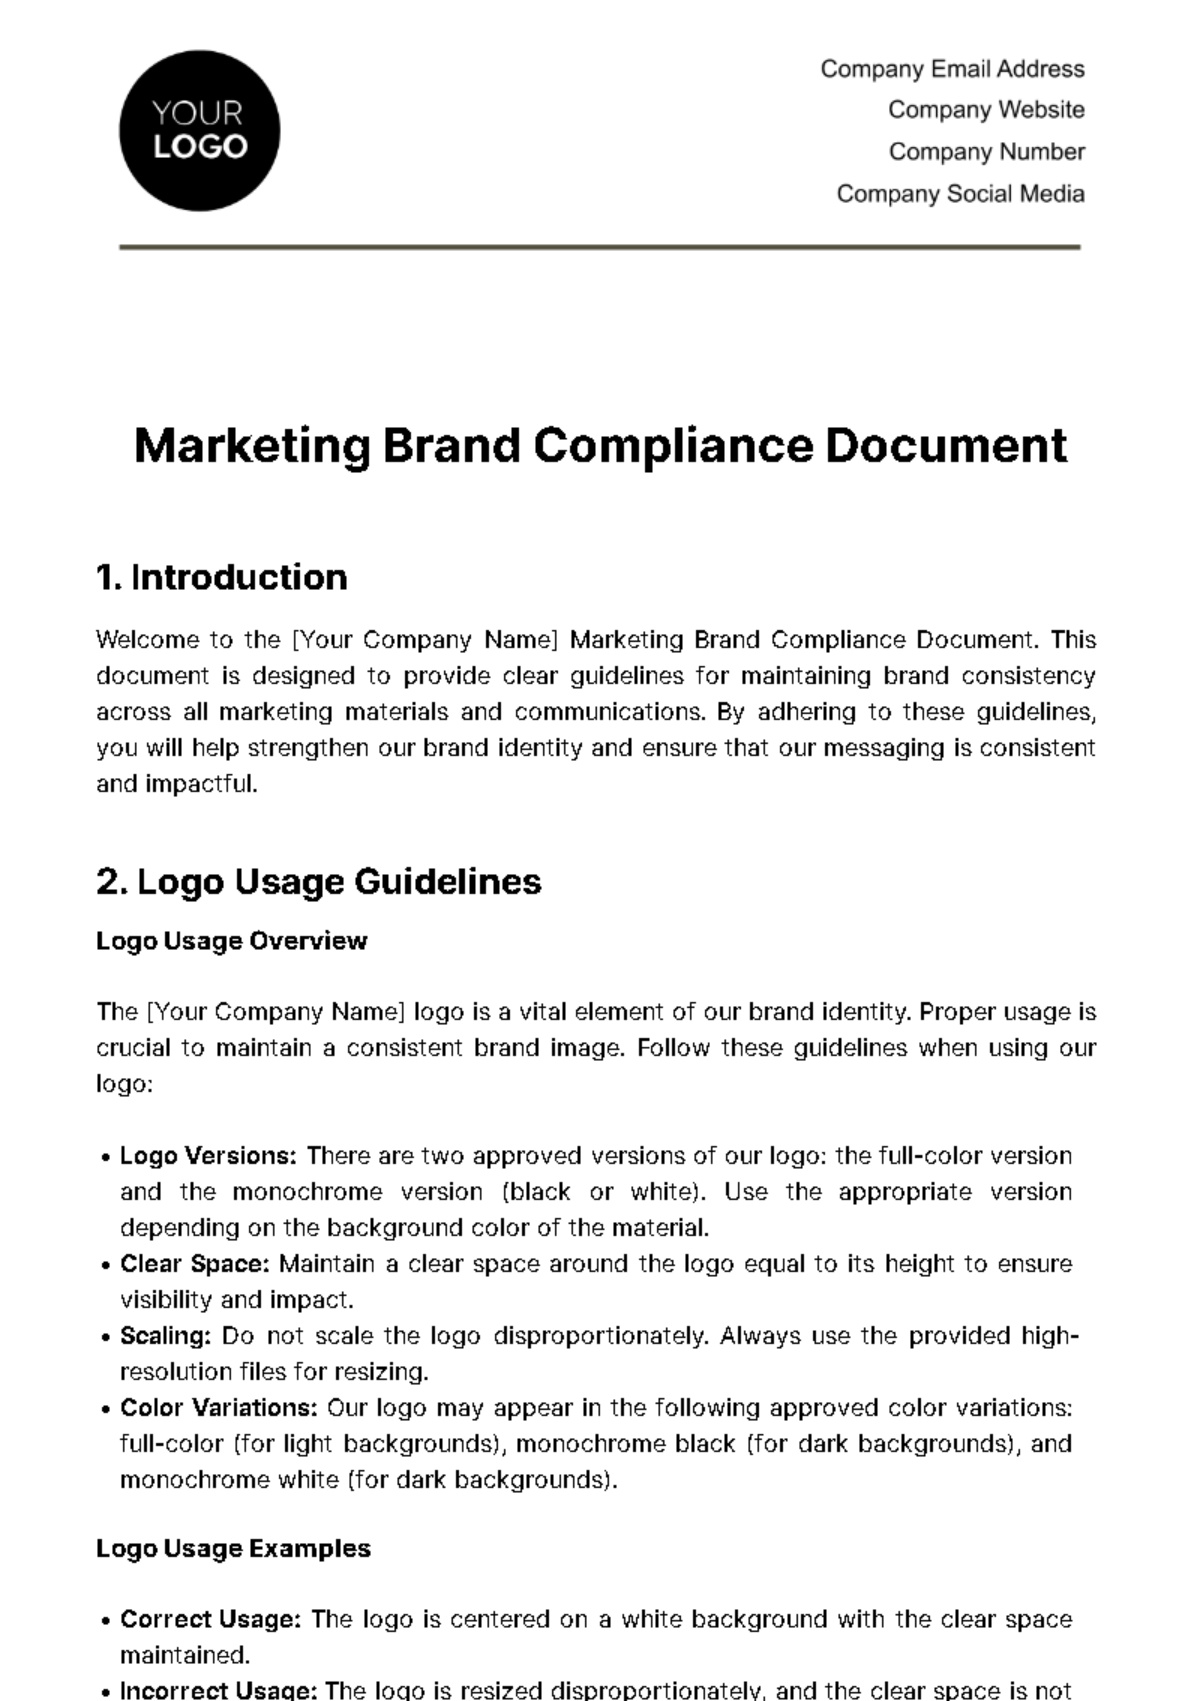 Marketing Brand Compliance Document Template